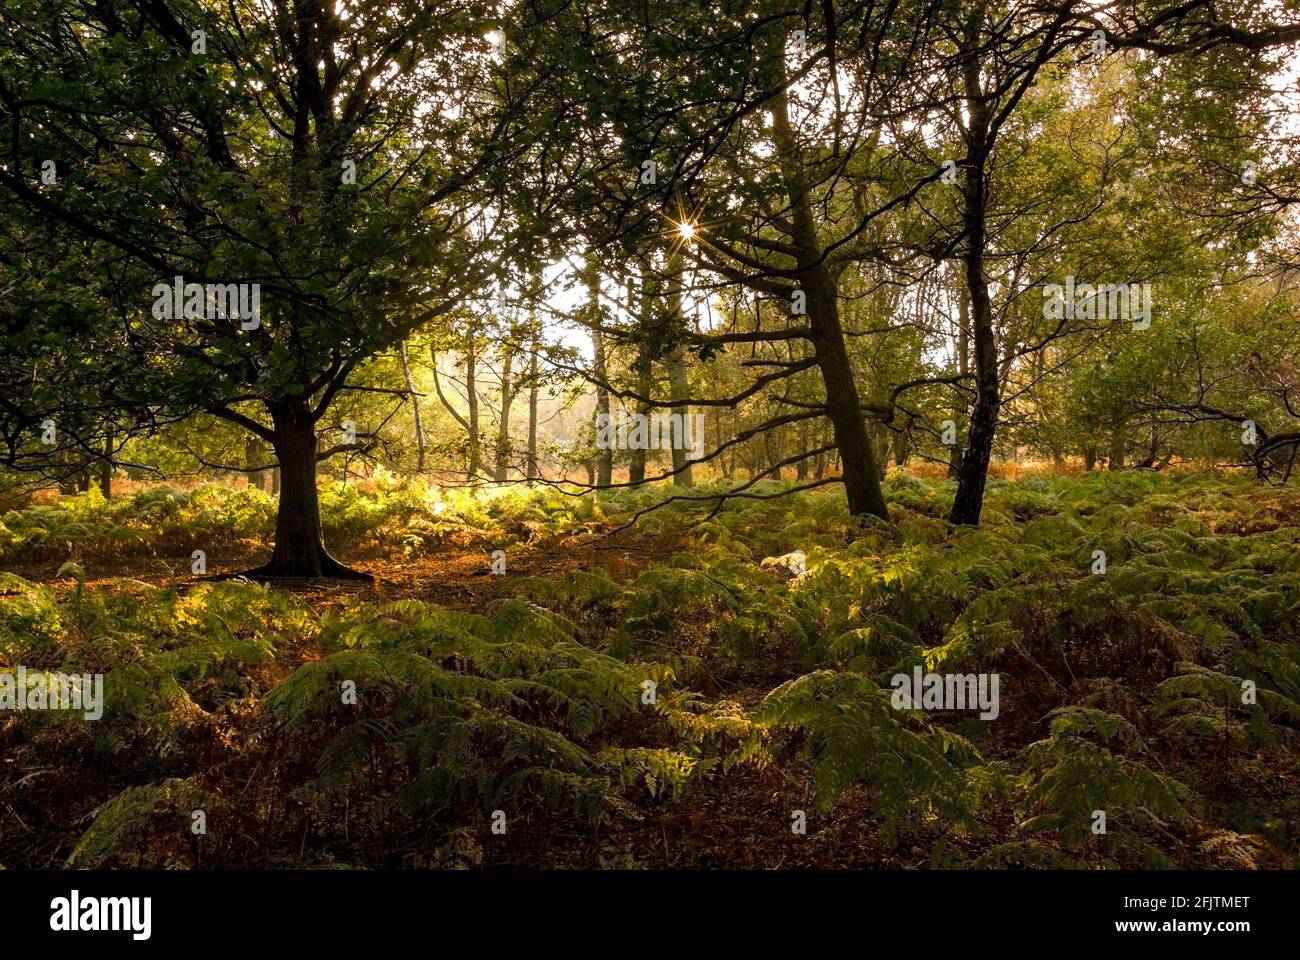 Afternoon sunlight filtering through the mature broadleaf trees of Ashridge Forest, Hertfordshire, UK in autumn. Stock Photo